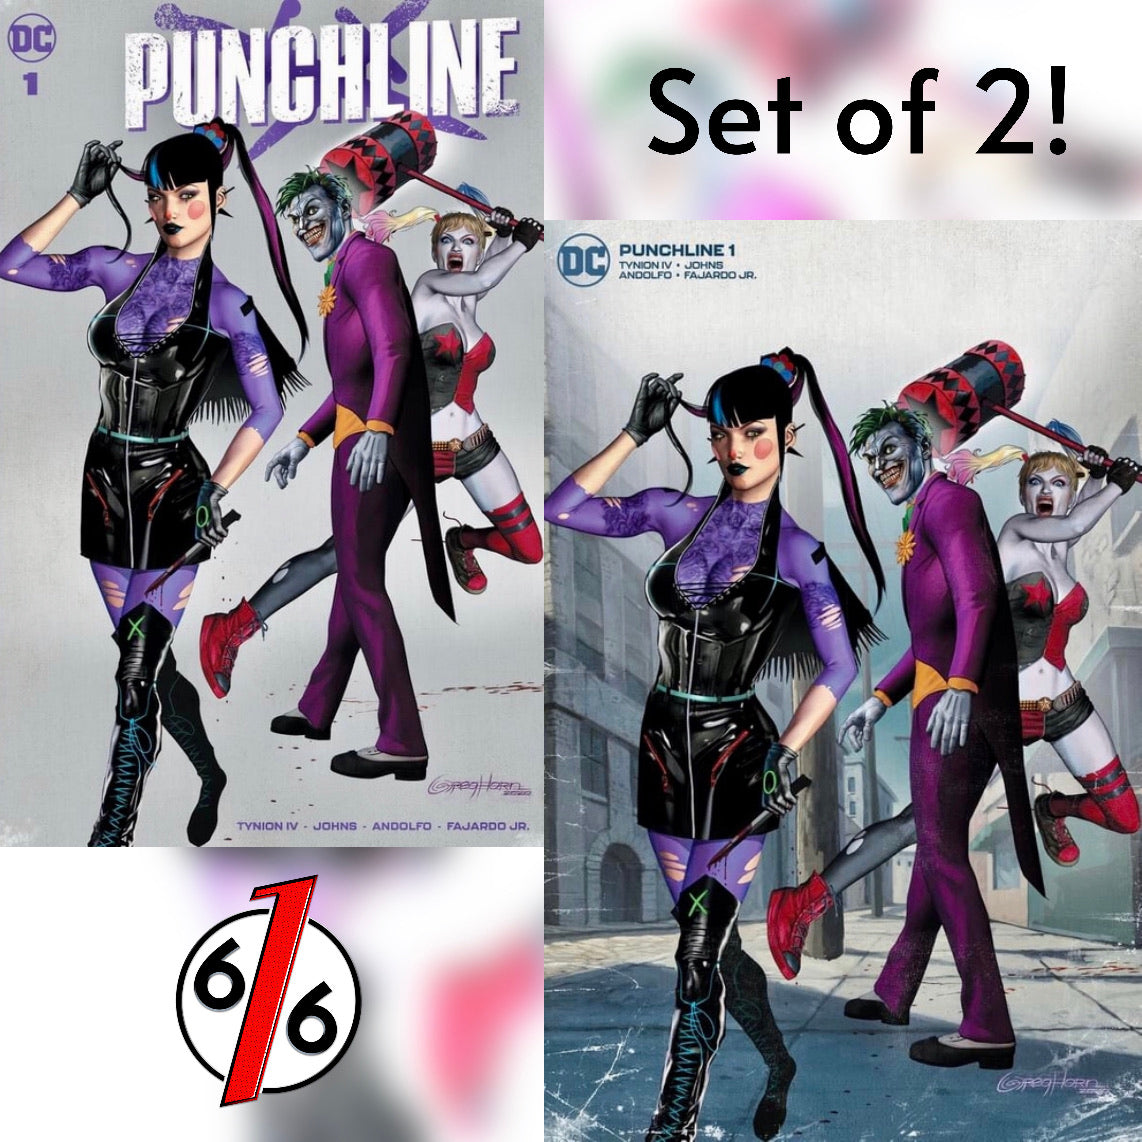 PUNCHLINE #1 GREG HORN SET OF 2 Exclusive Variants Joker War